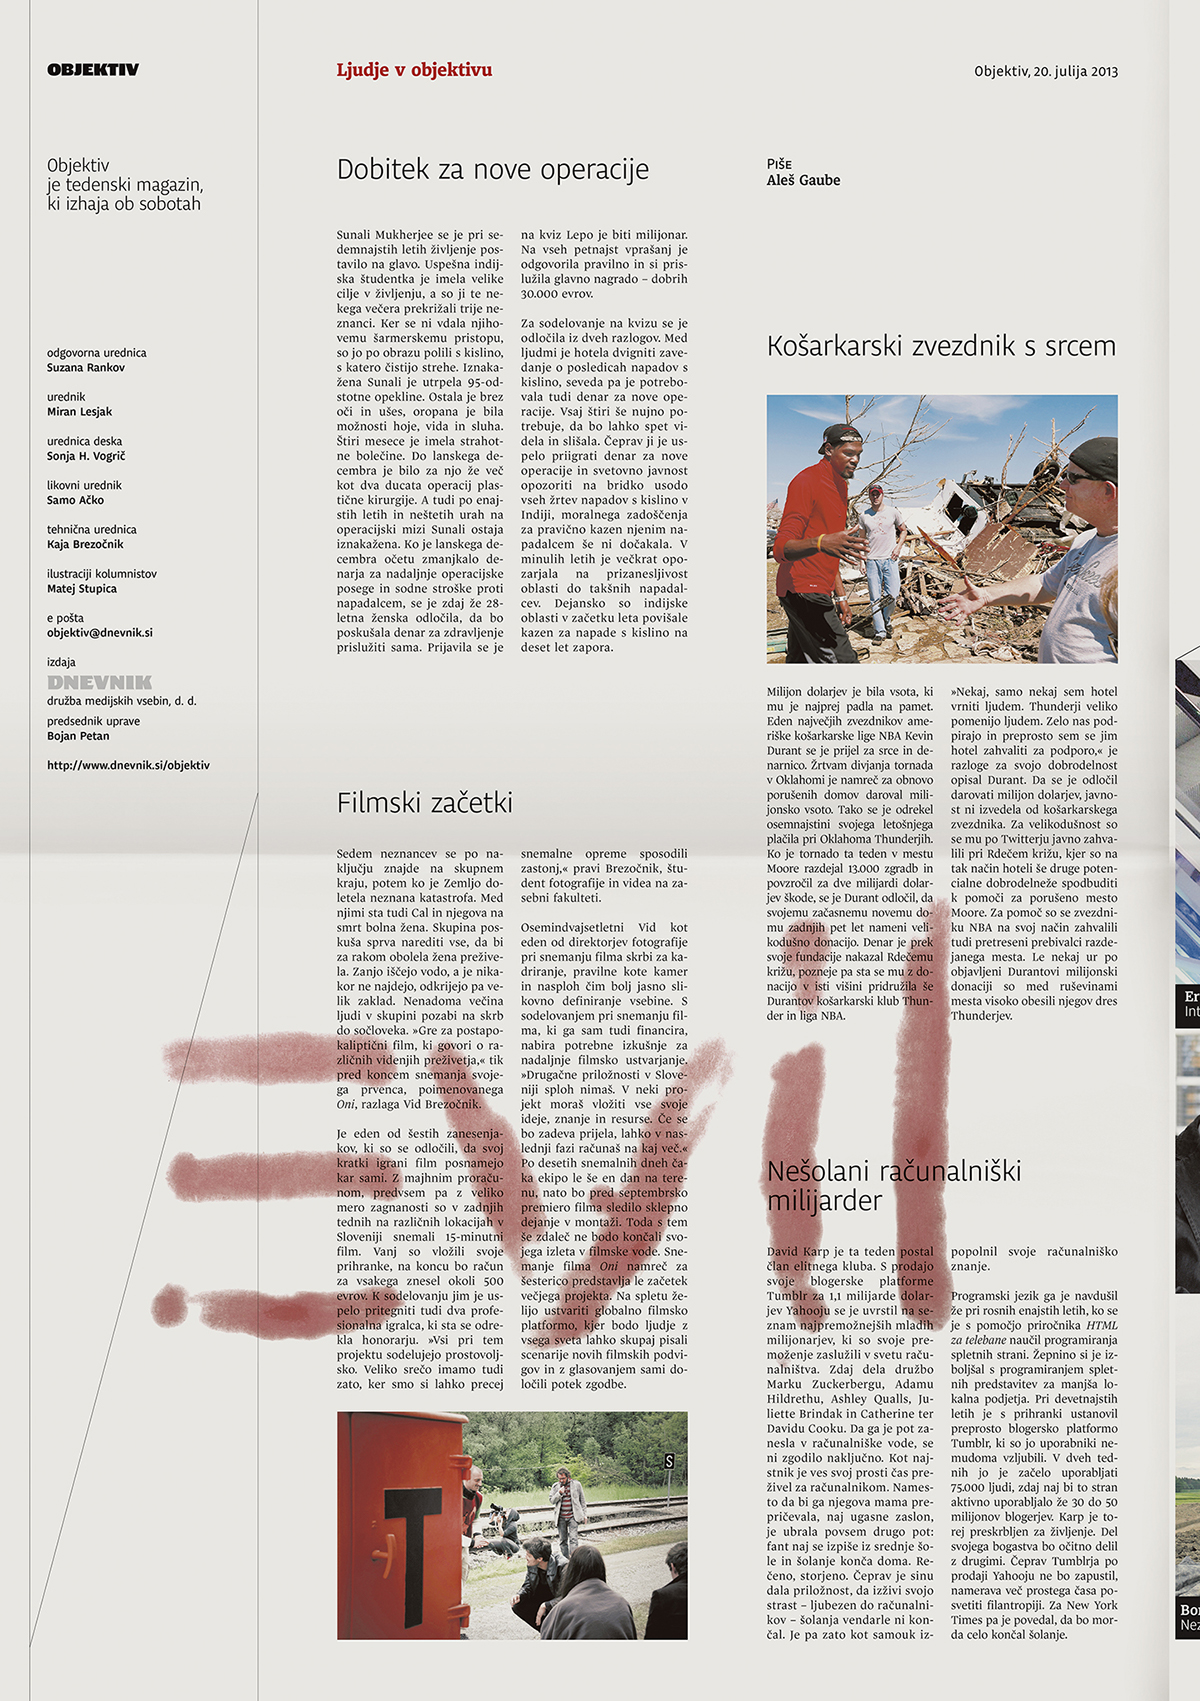 cover  newspaper Food   Fast food photo-illustration Editorial Illustration objektiv tomato košir slovenia award McDonalds Fast food evil live grand-prix